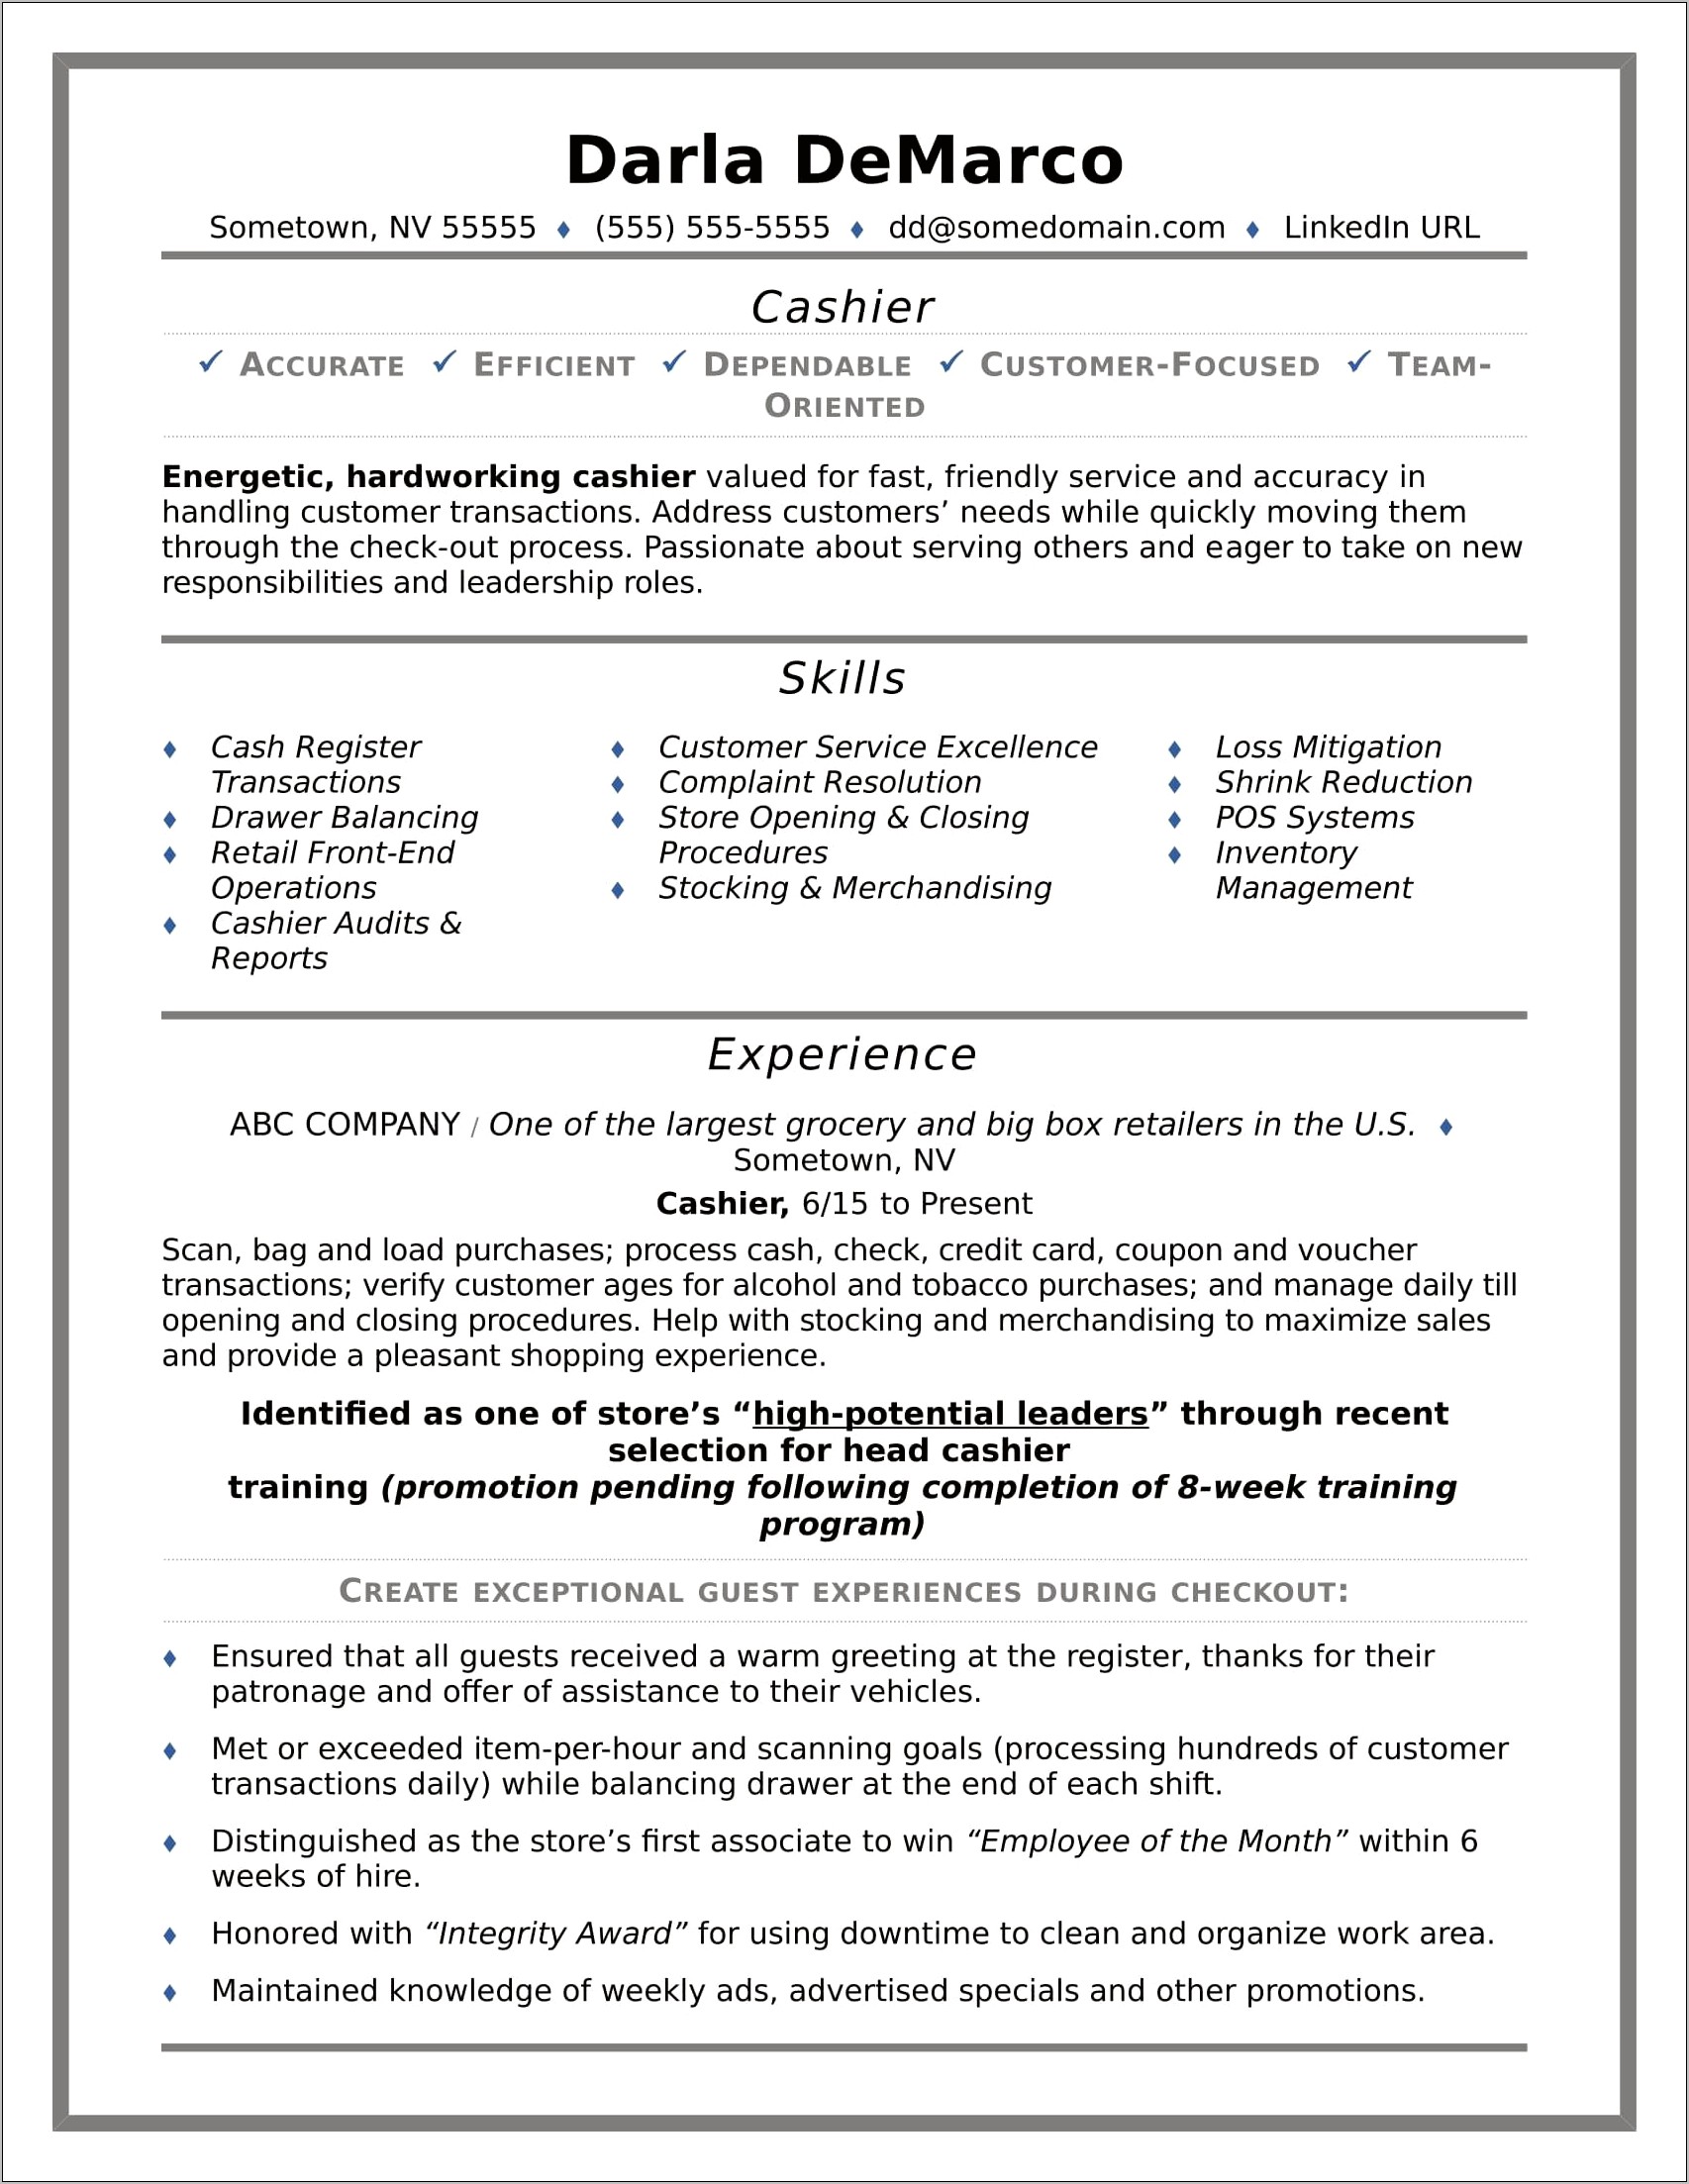 Cashier Job Summary For Resume